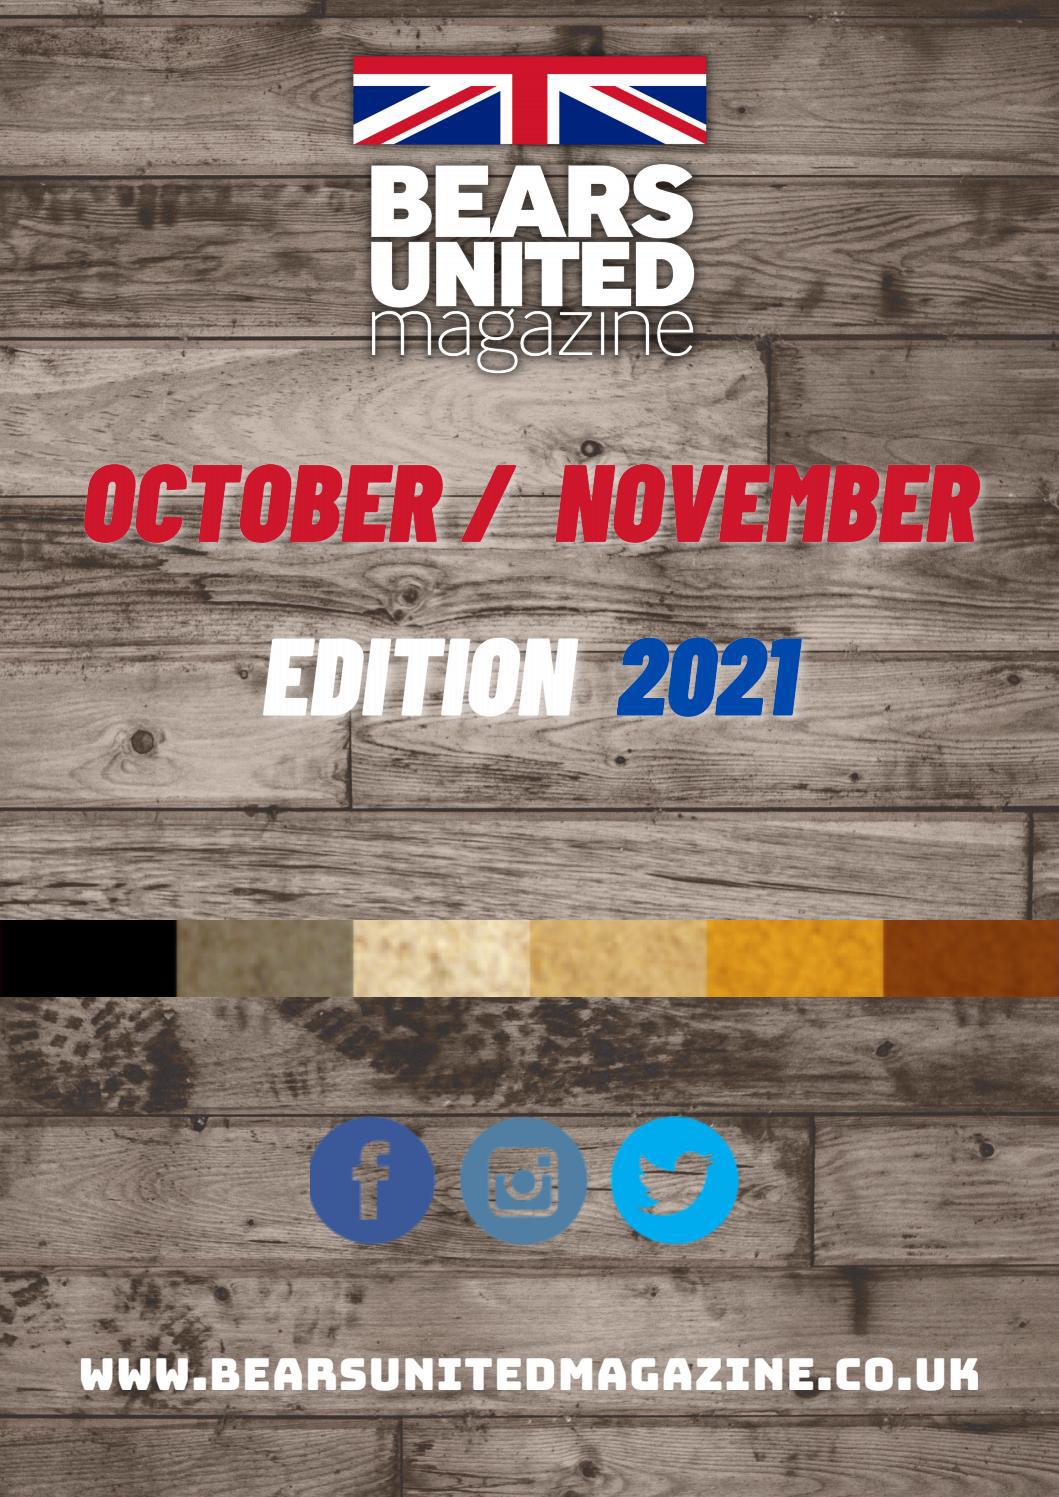 Bears United Magazine Newsletter Edition Oct/Nov 2021